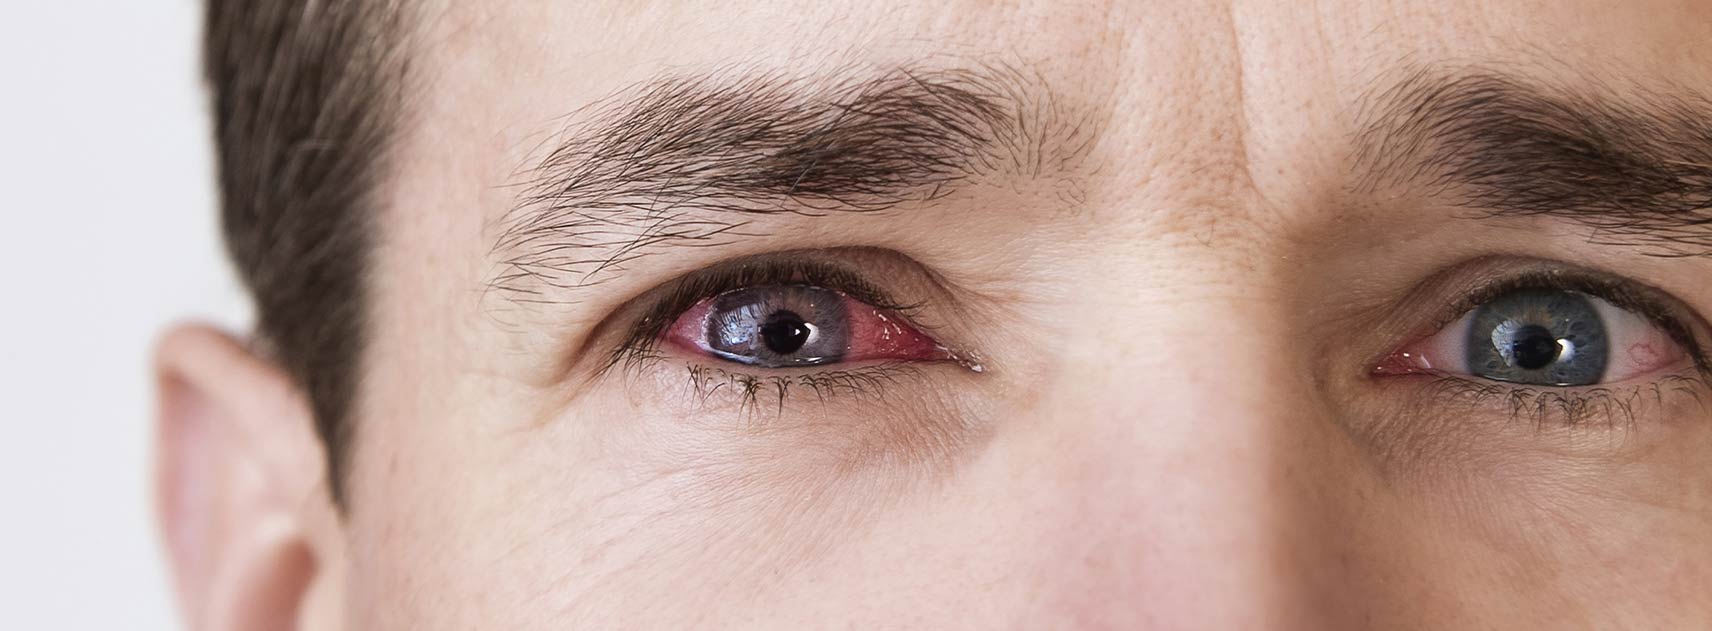 Eye margin inflammation